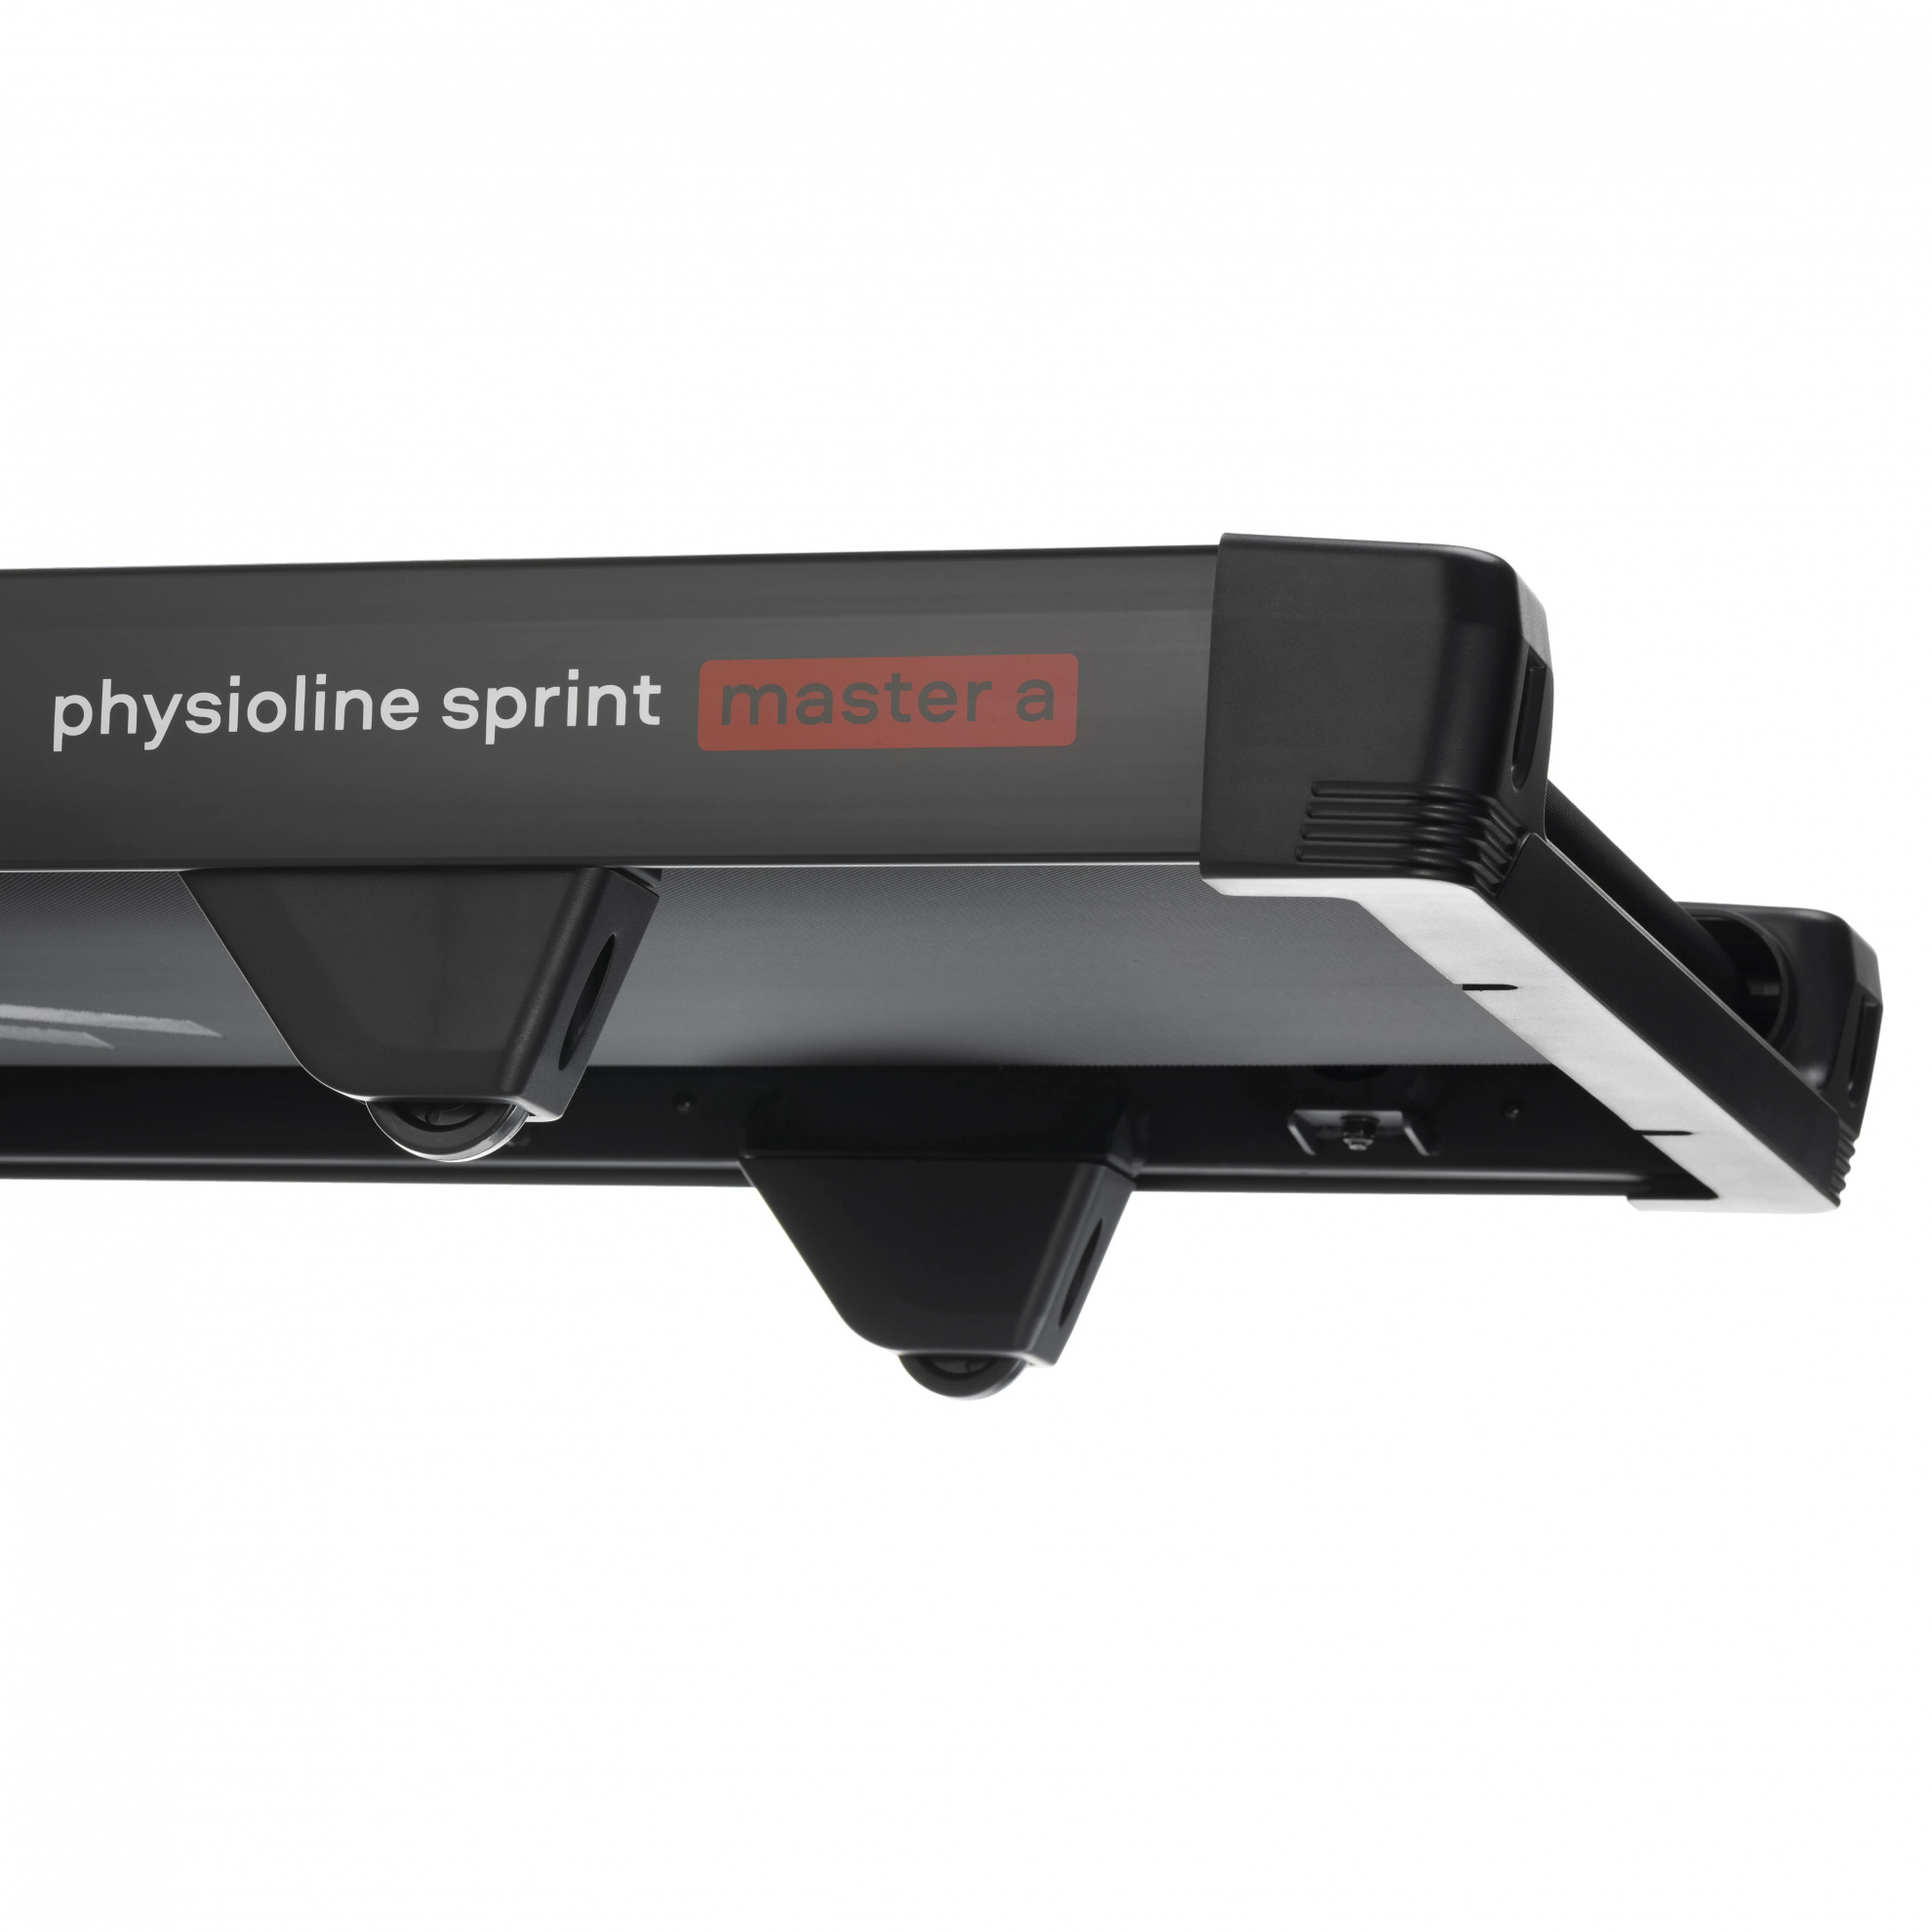 Svensson Body Labs Physioline Sprintmaster A макс. вес пользователя, кг - 146